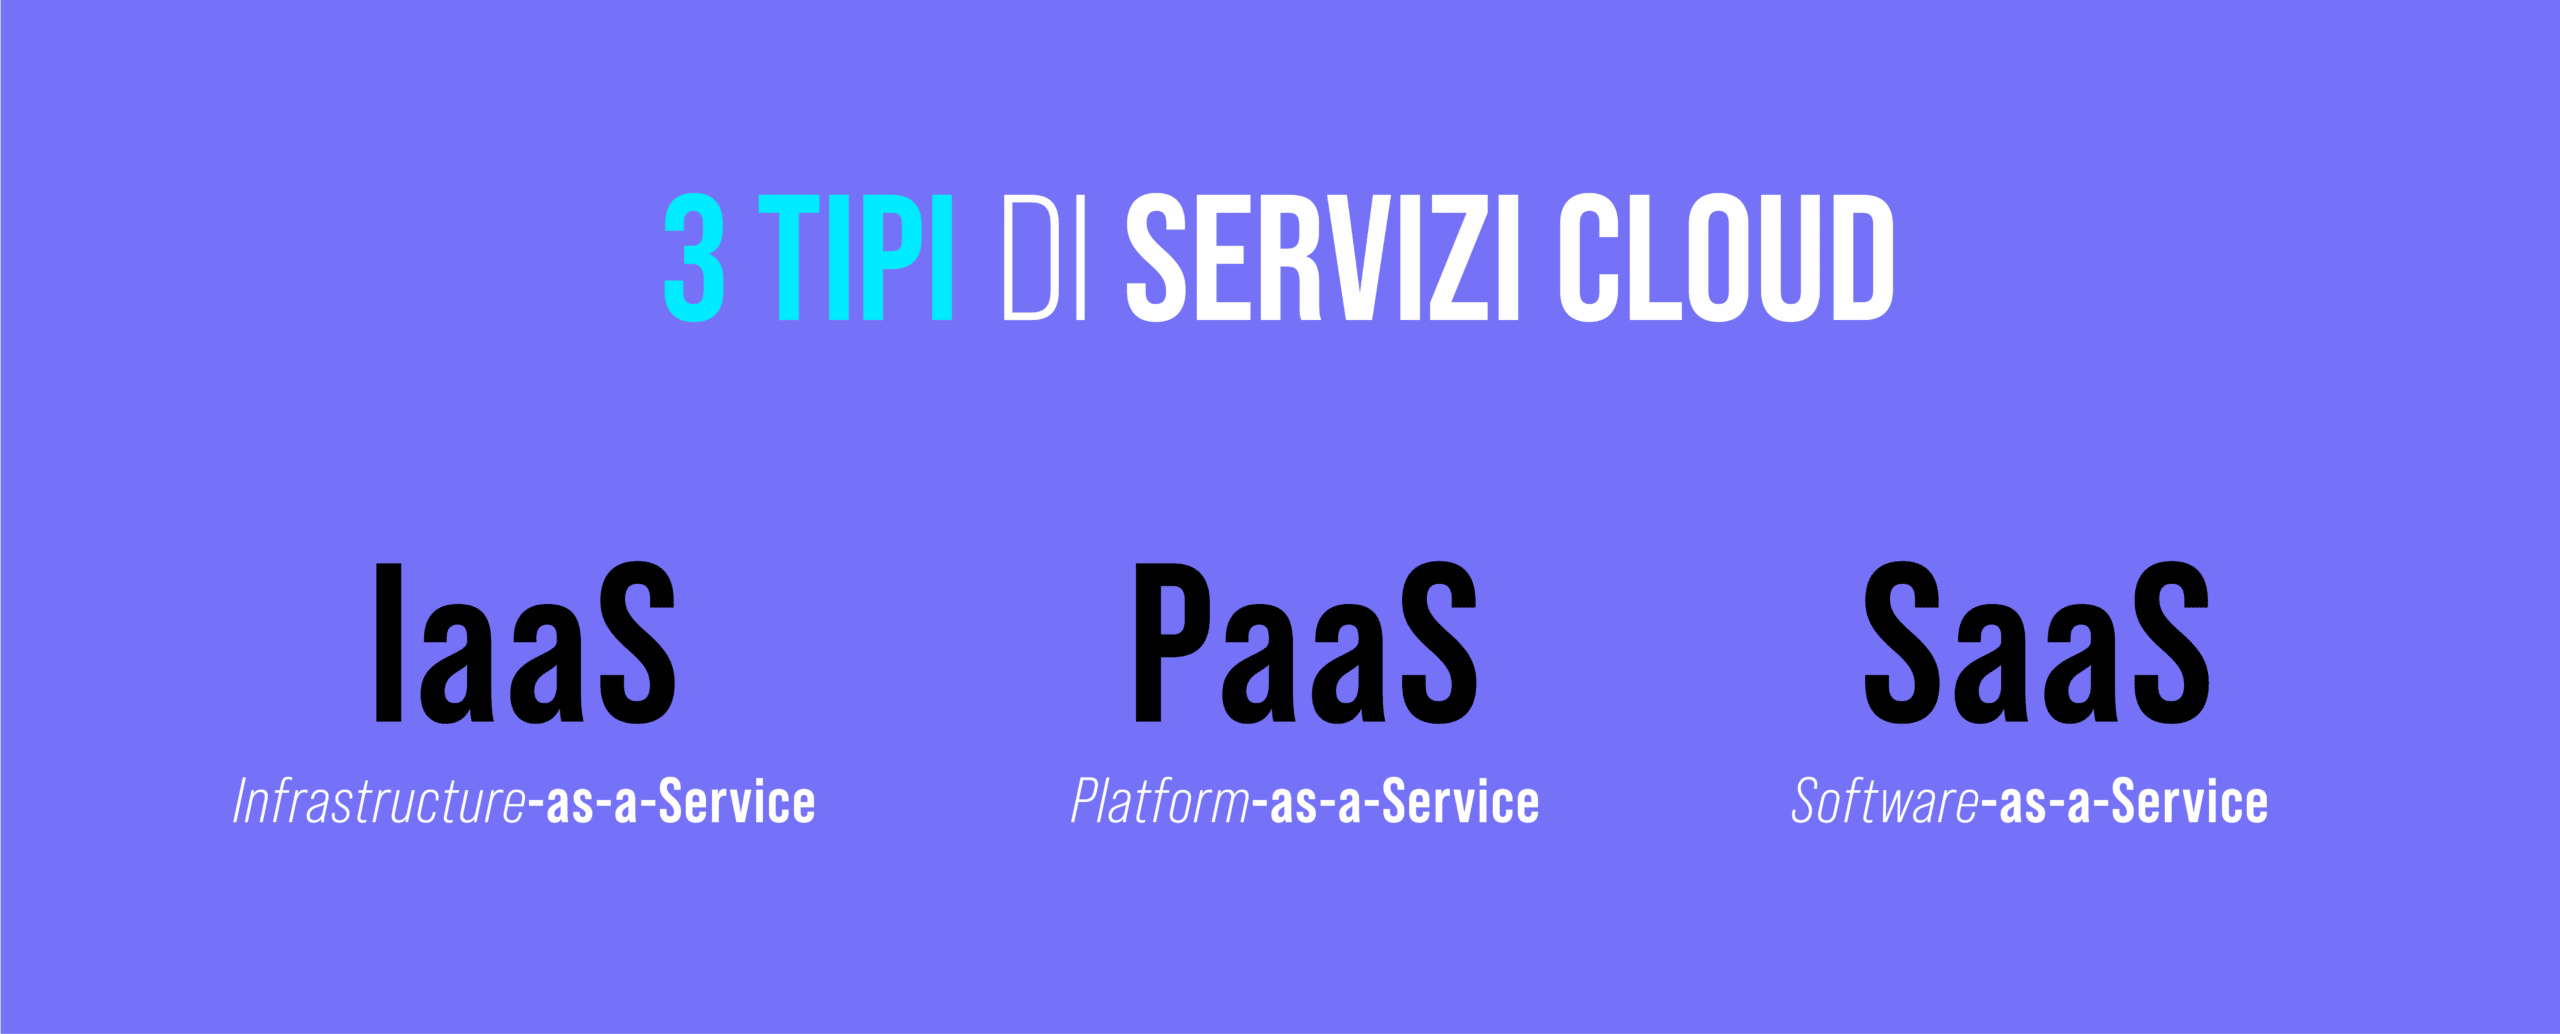 3 tipi di servizi cloud_cloud